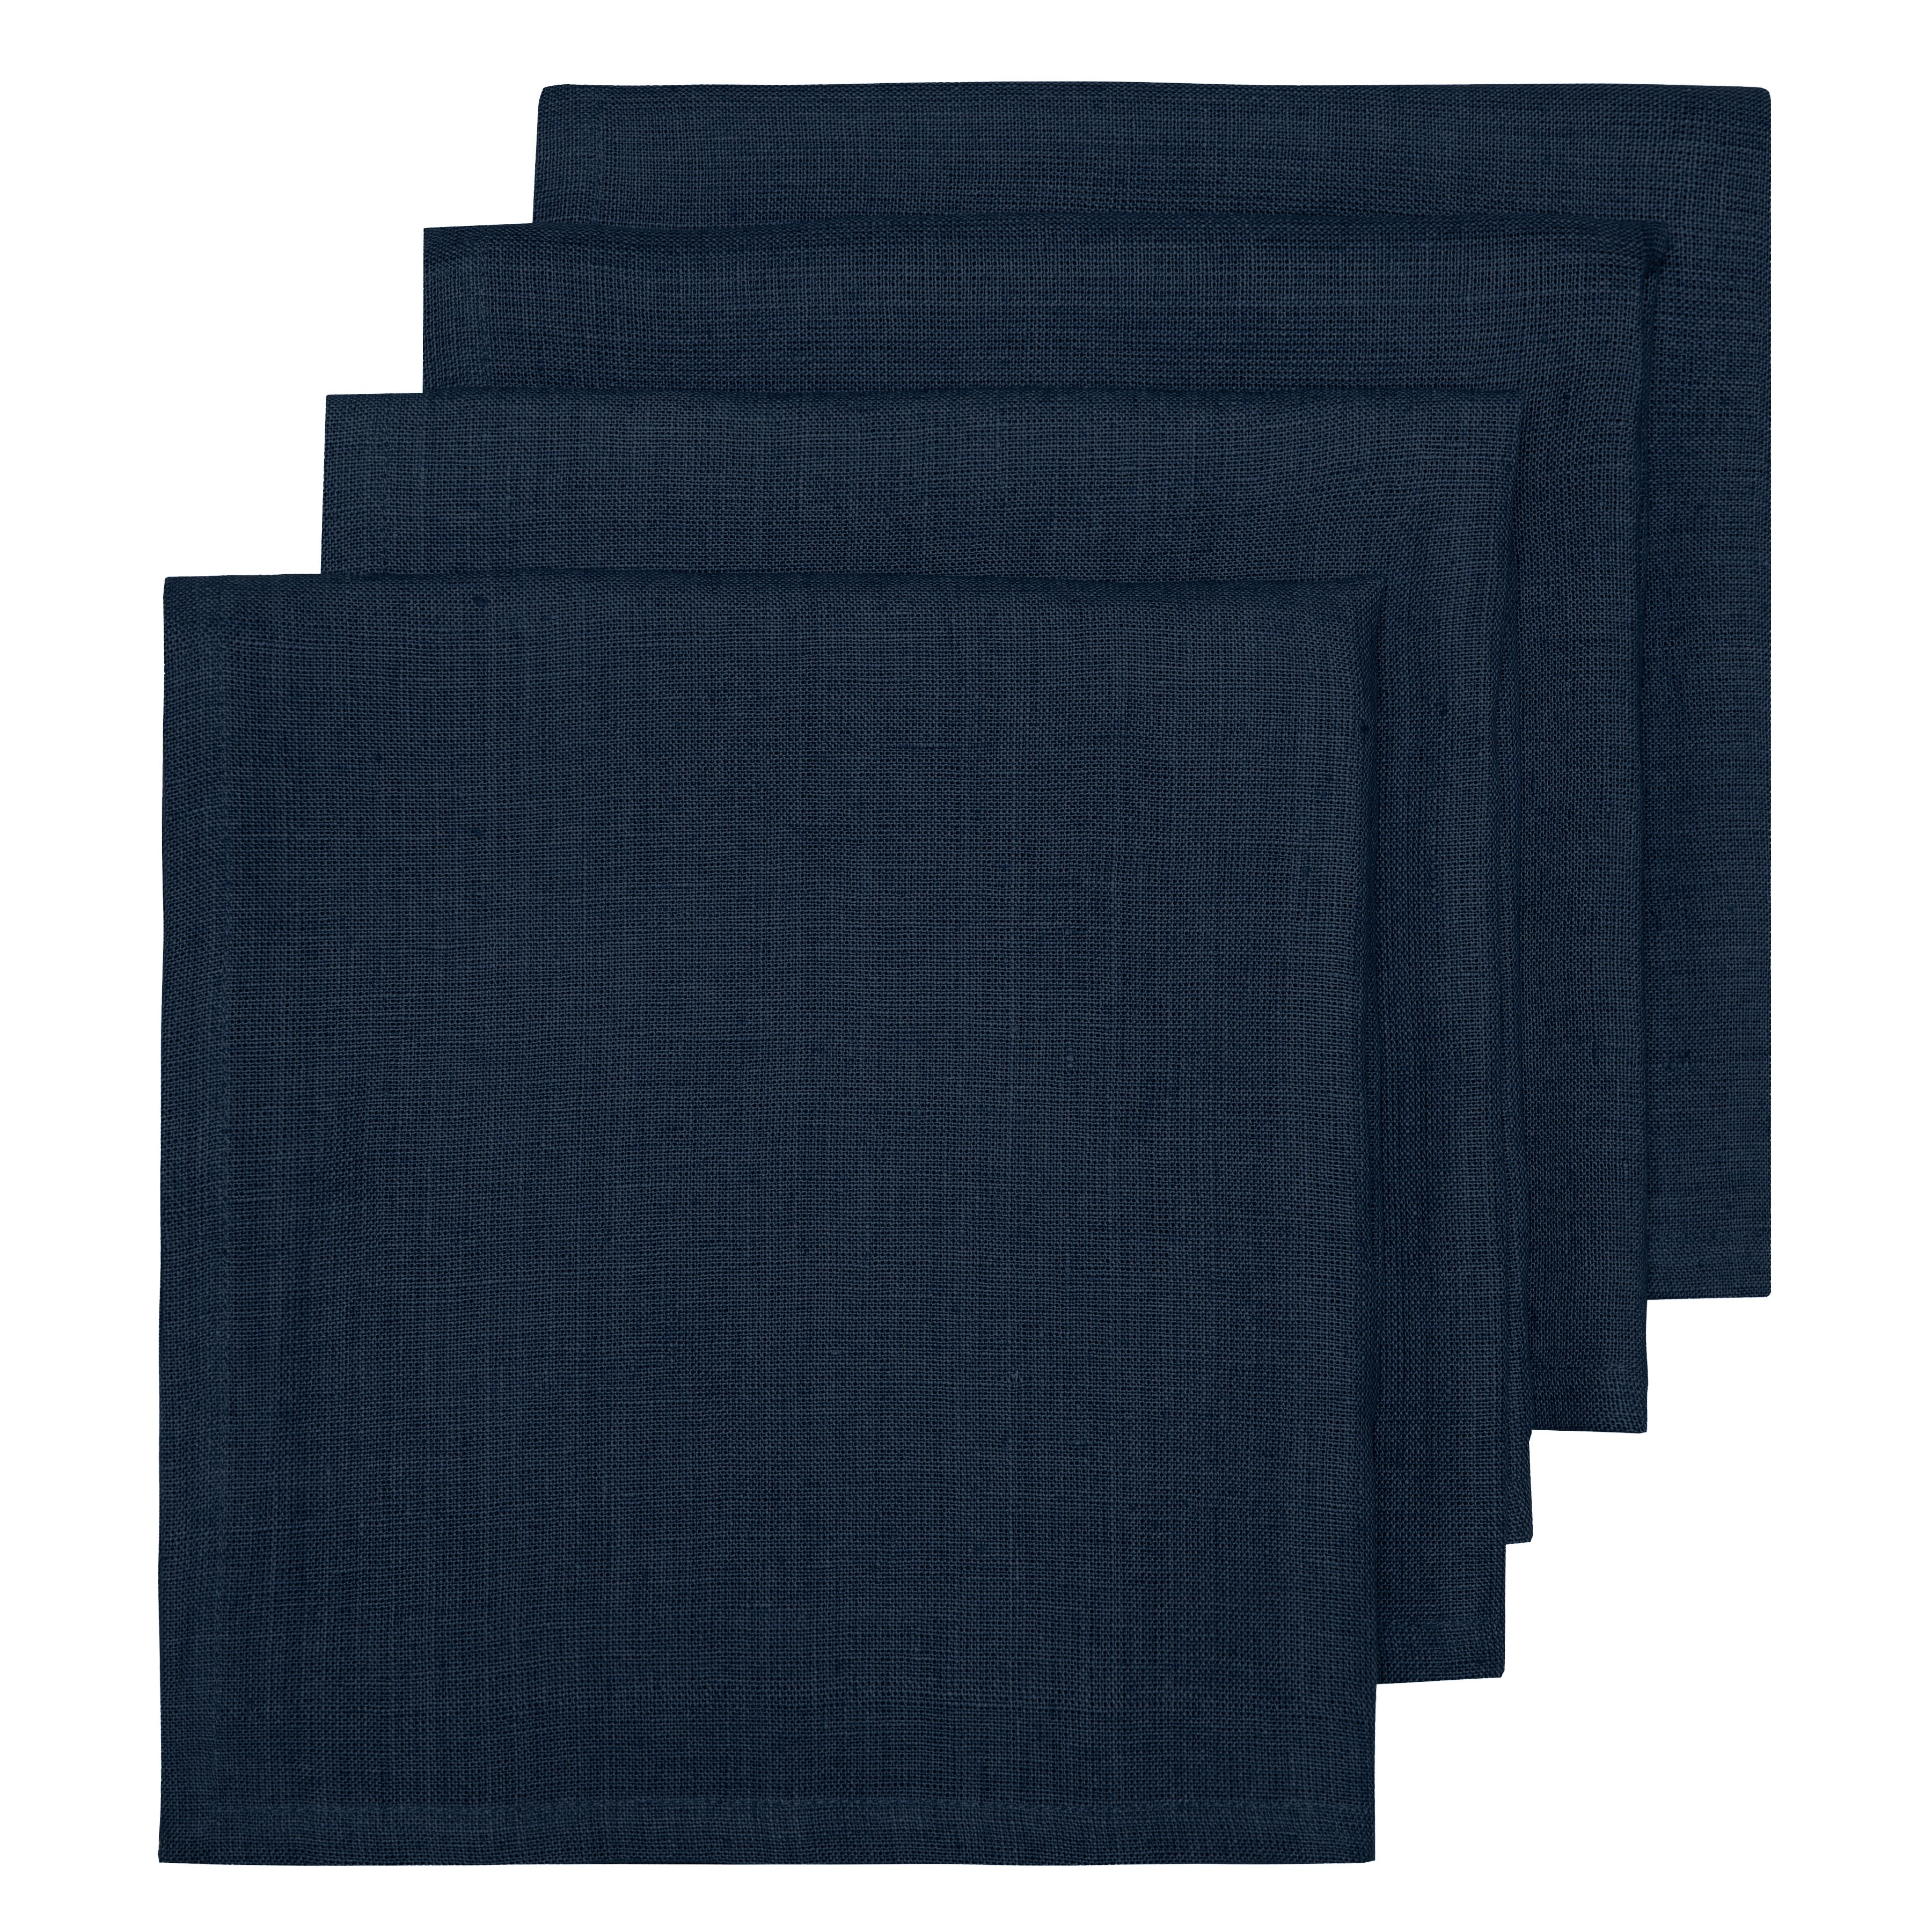 All Cotton and Linen Hemstitch Napkins - 20x20 Navy Blue, Set of 6 Navy Blue Napkins